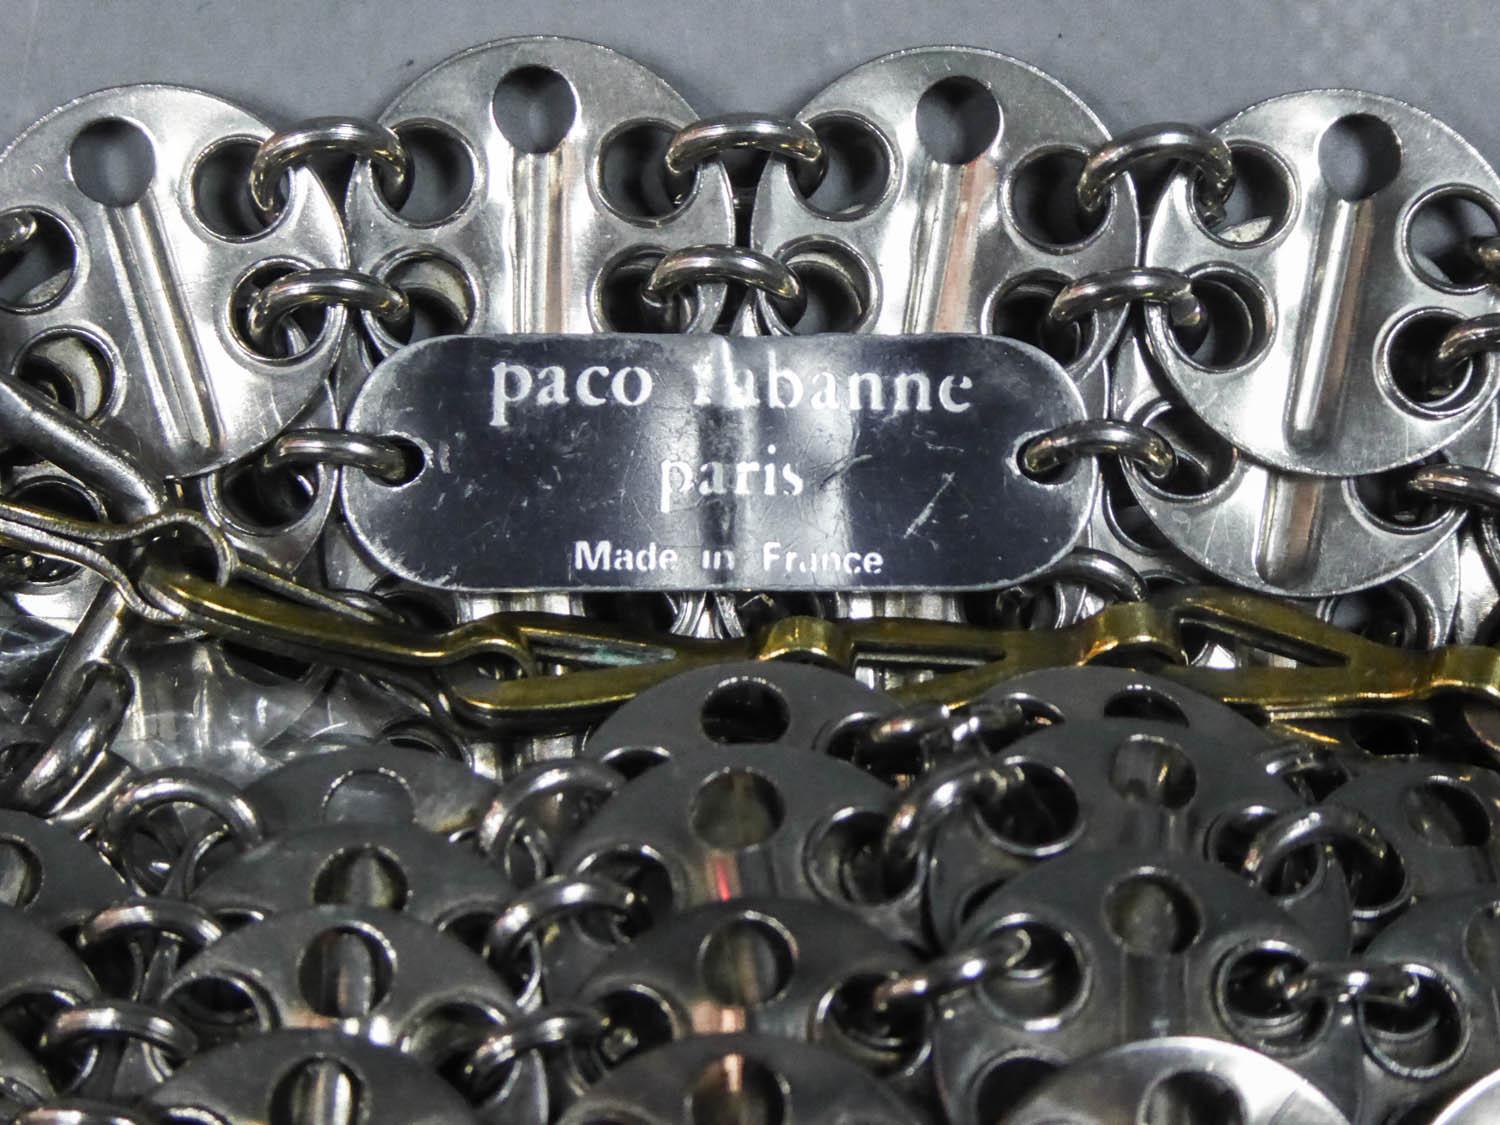  Iconic Paco Rabanne Steel Bag Circa 1968 2